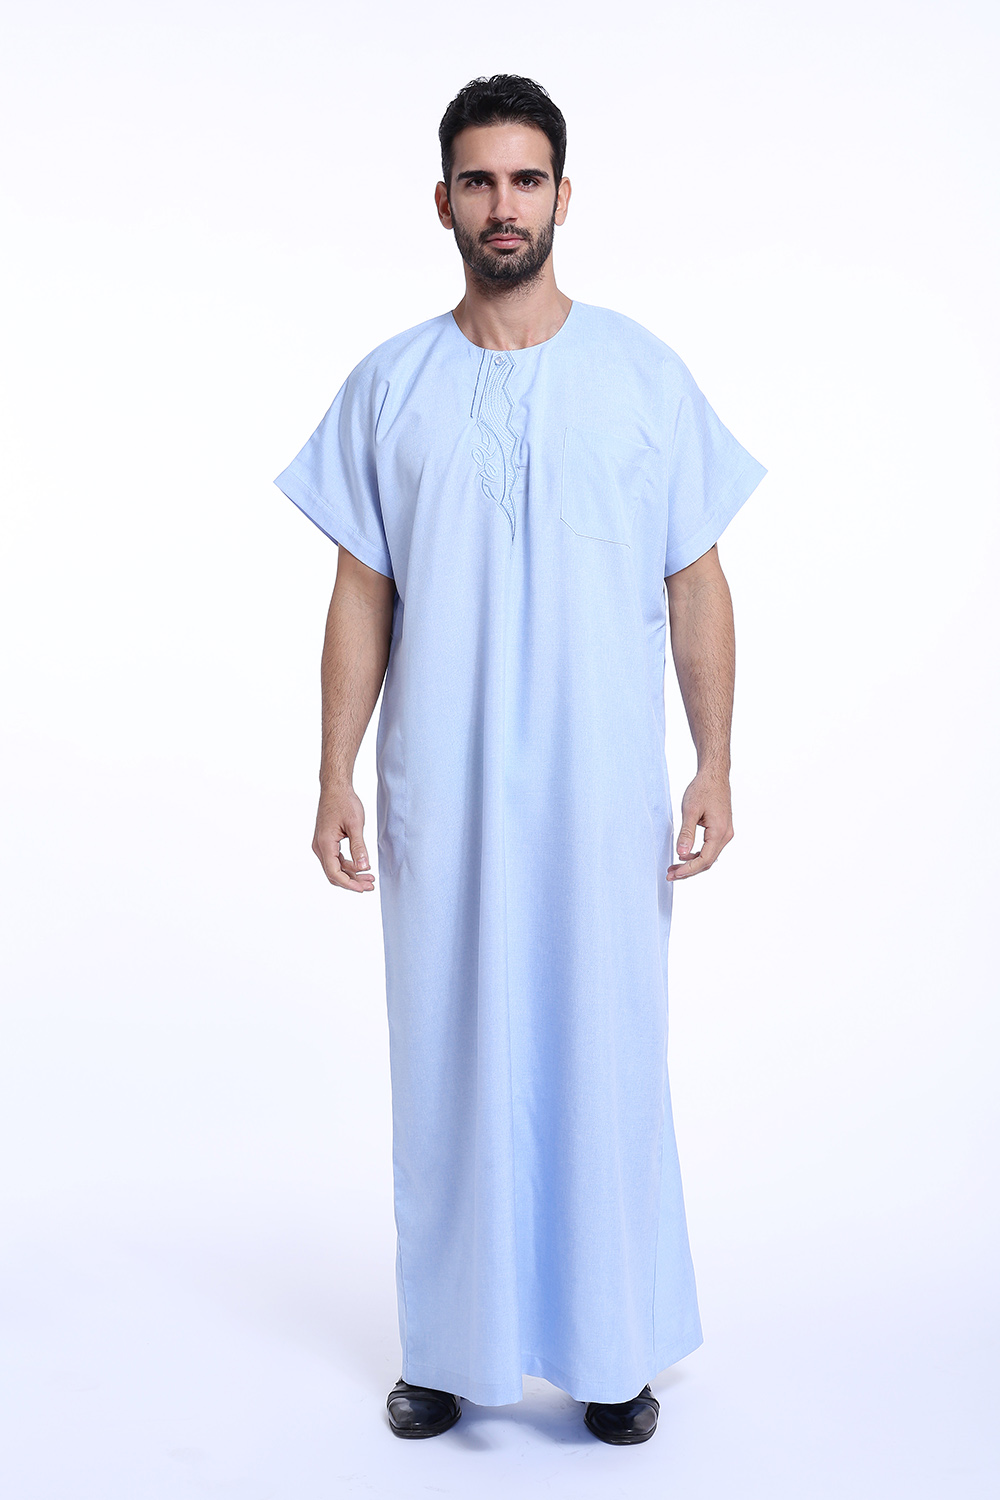 Saudi Thobe Men Galabeya Thoub Abaya Robe Dishdasha Arab Kaftan Muslim Clothing Ebay